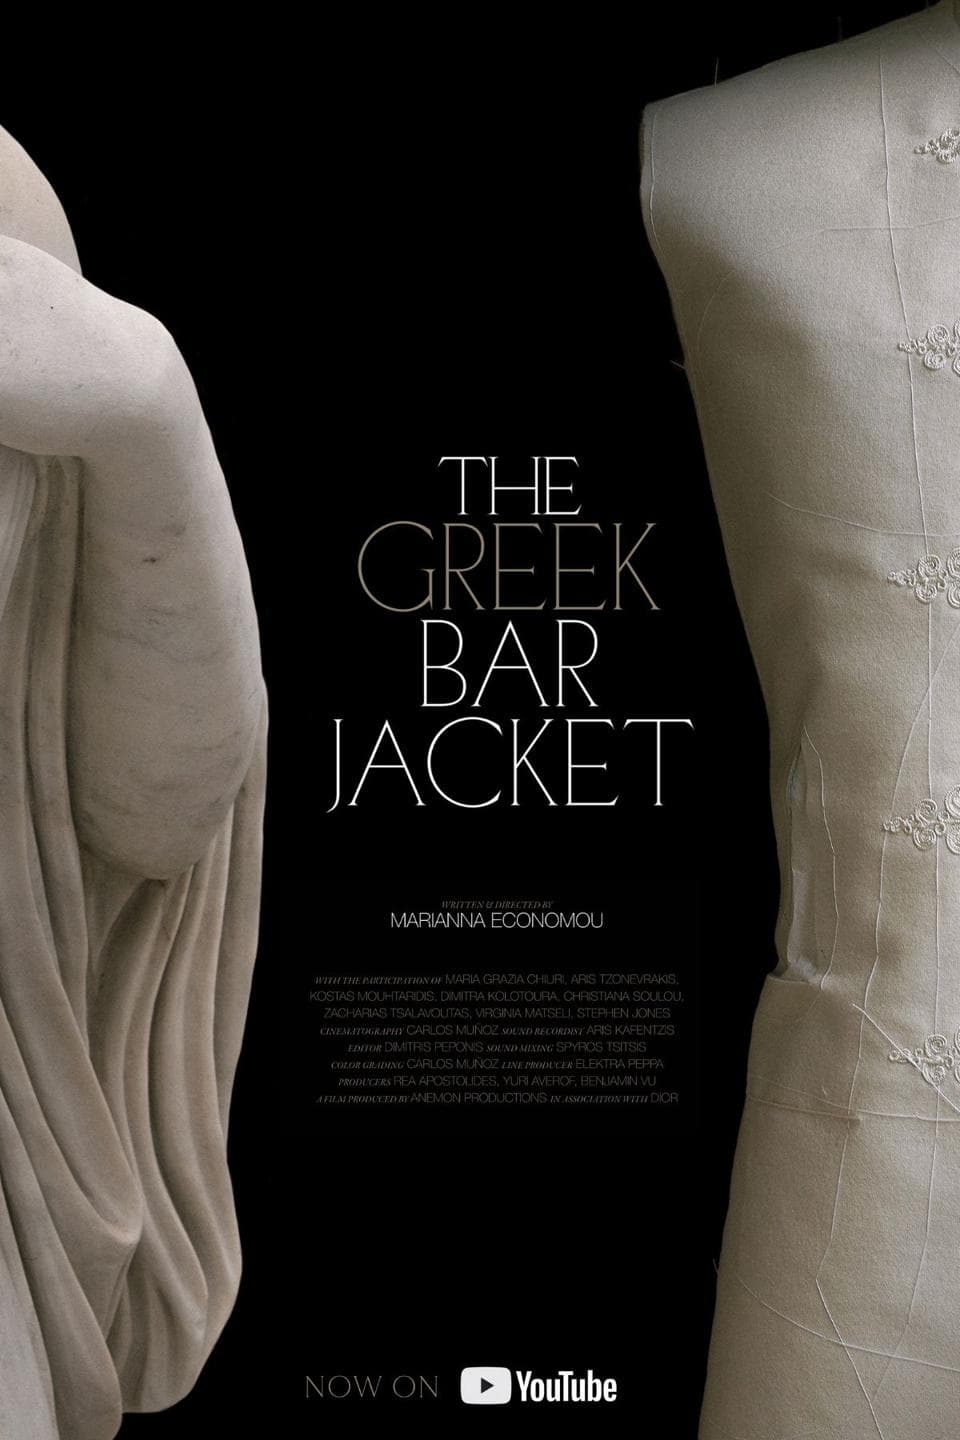 The Greek Bar Jacket